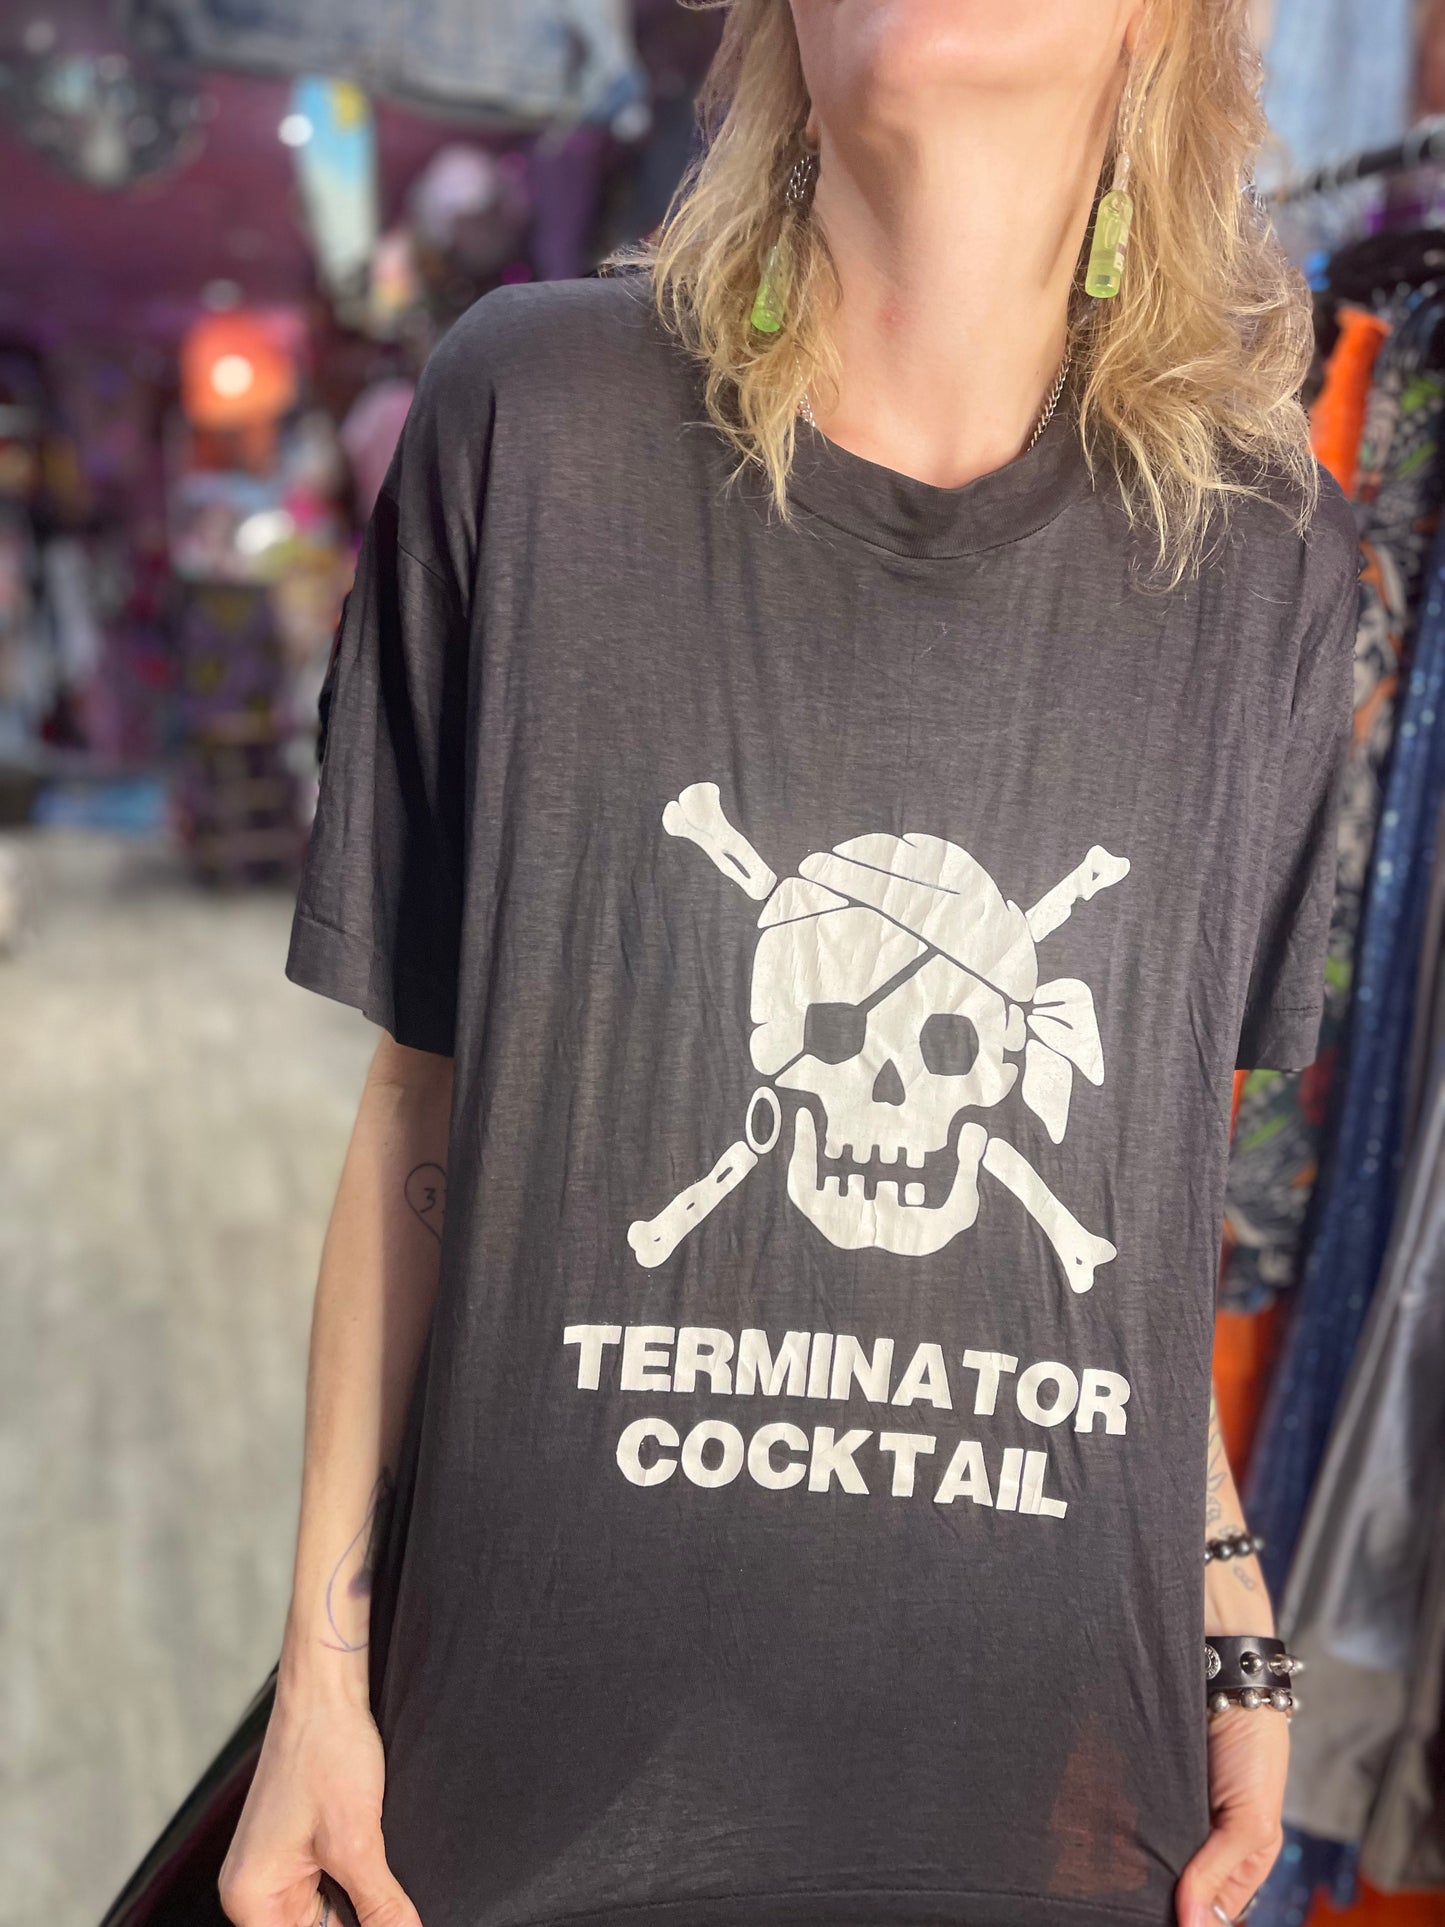 Vintage 80s Terminator Cocktail Tshirt